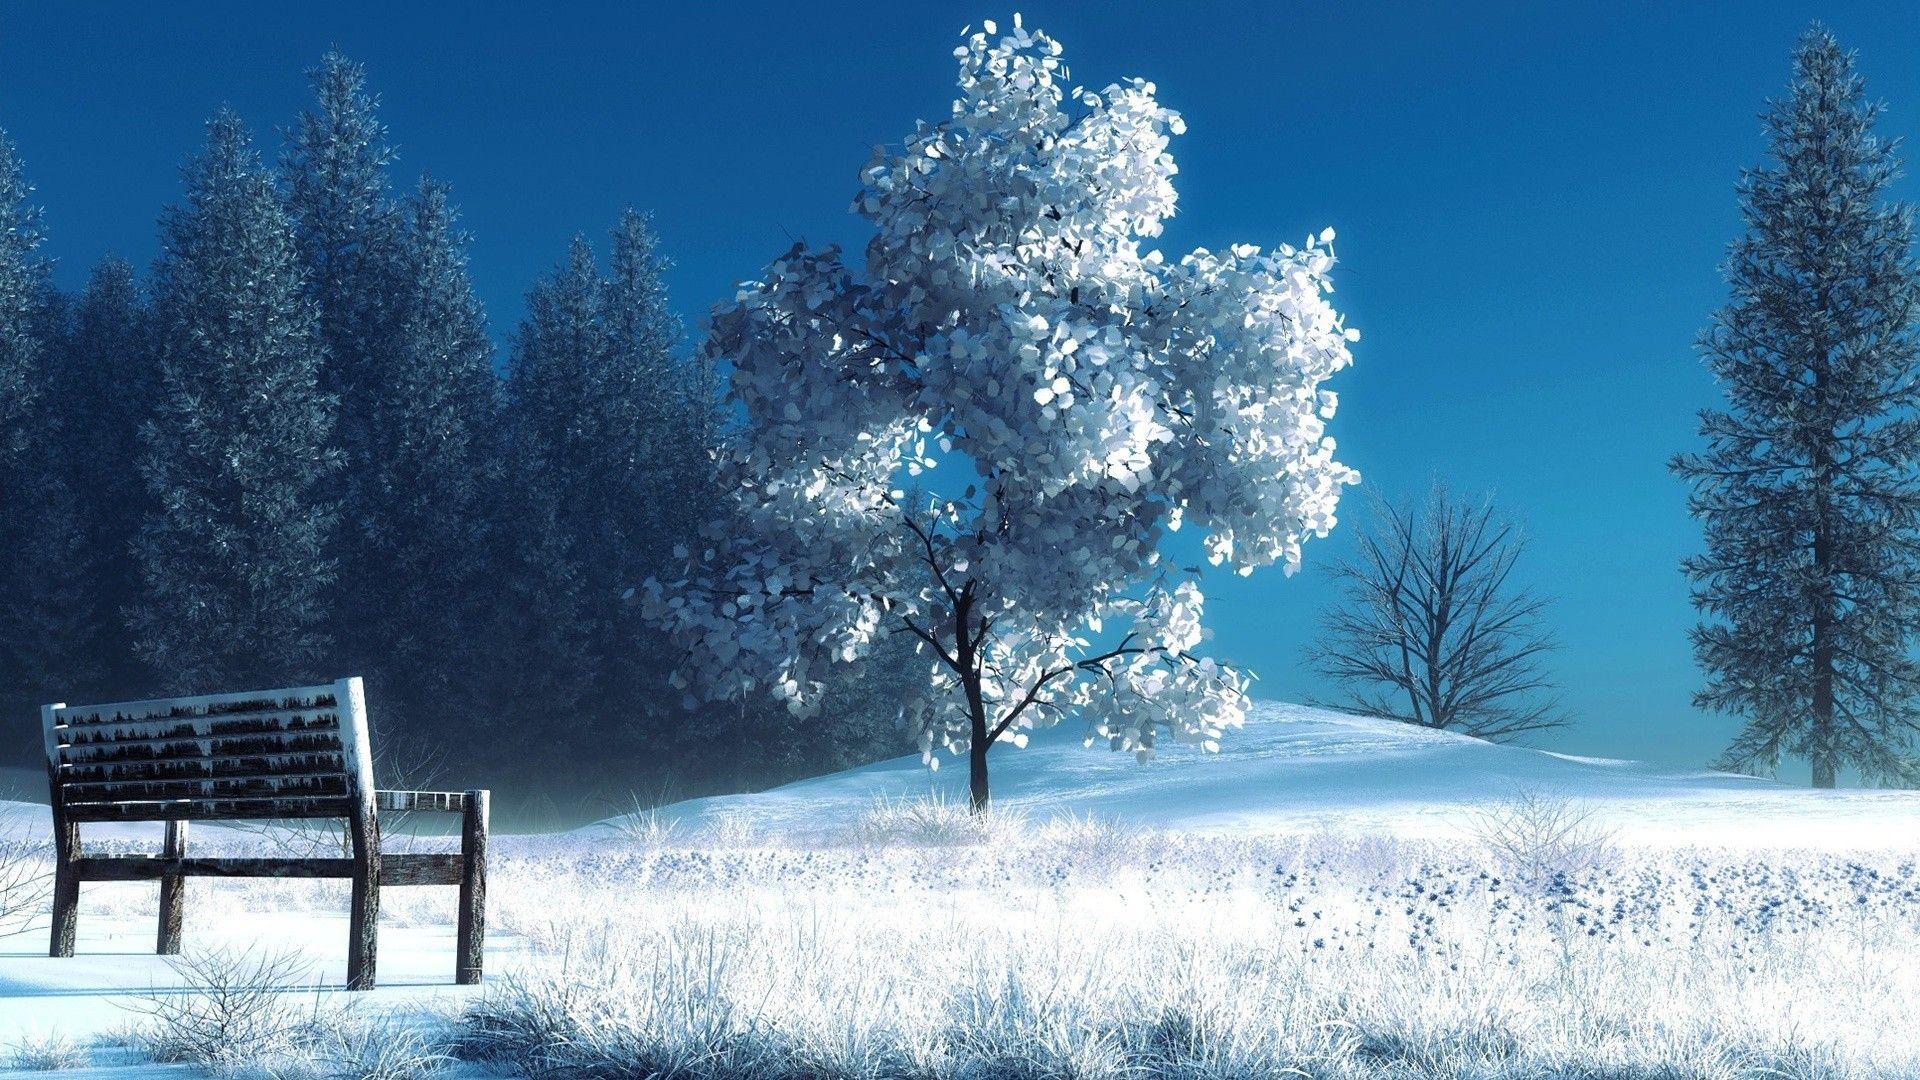 Download Wallpaper 1920x1080 winter, landscape, nature, snow, bench